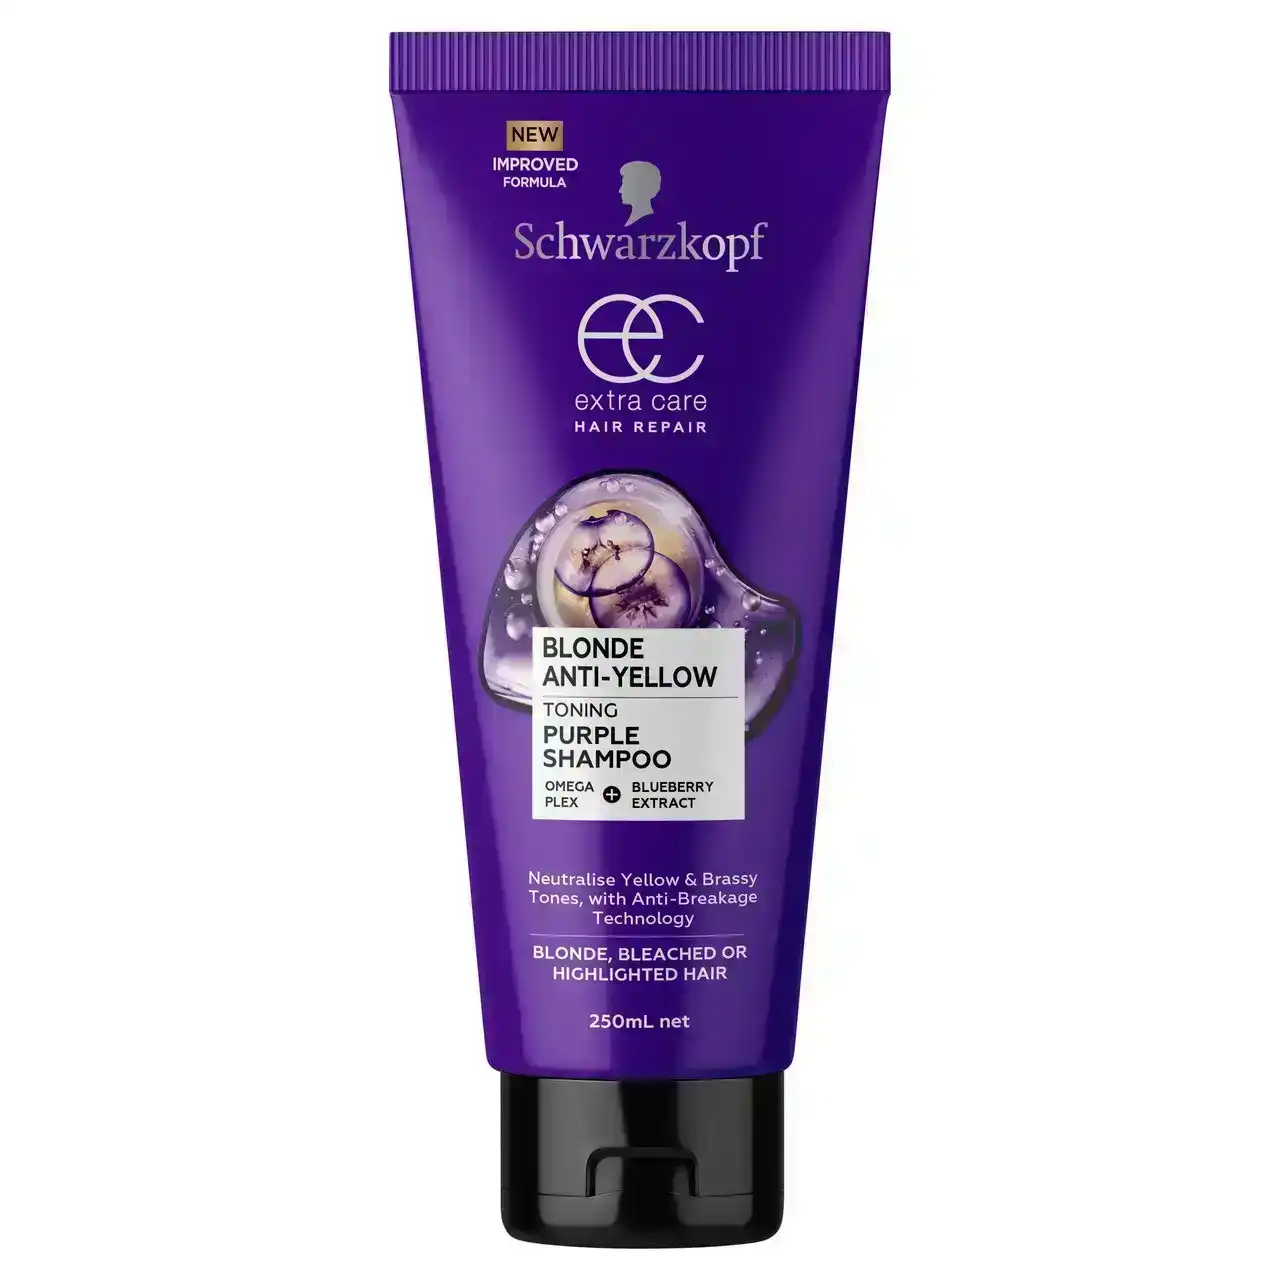 Schwarzkopf Extra Care Blonde Anti-Yellow Toning Purple Shampoo 250mL